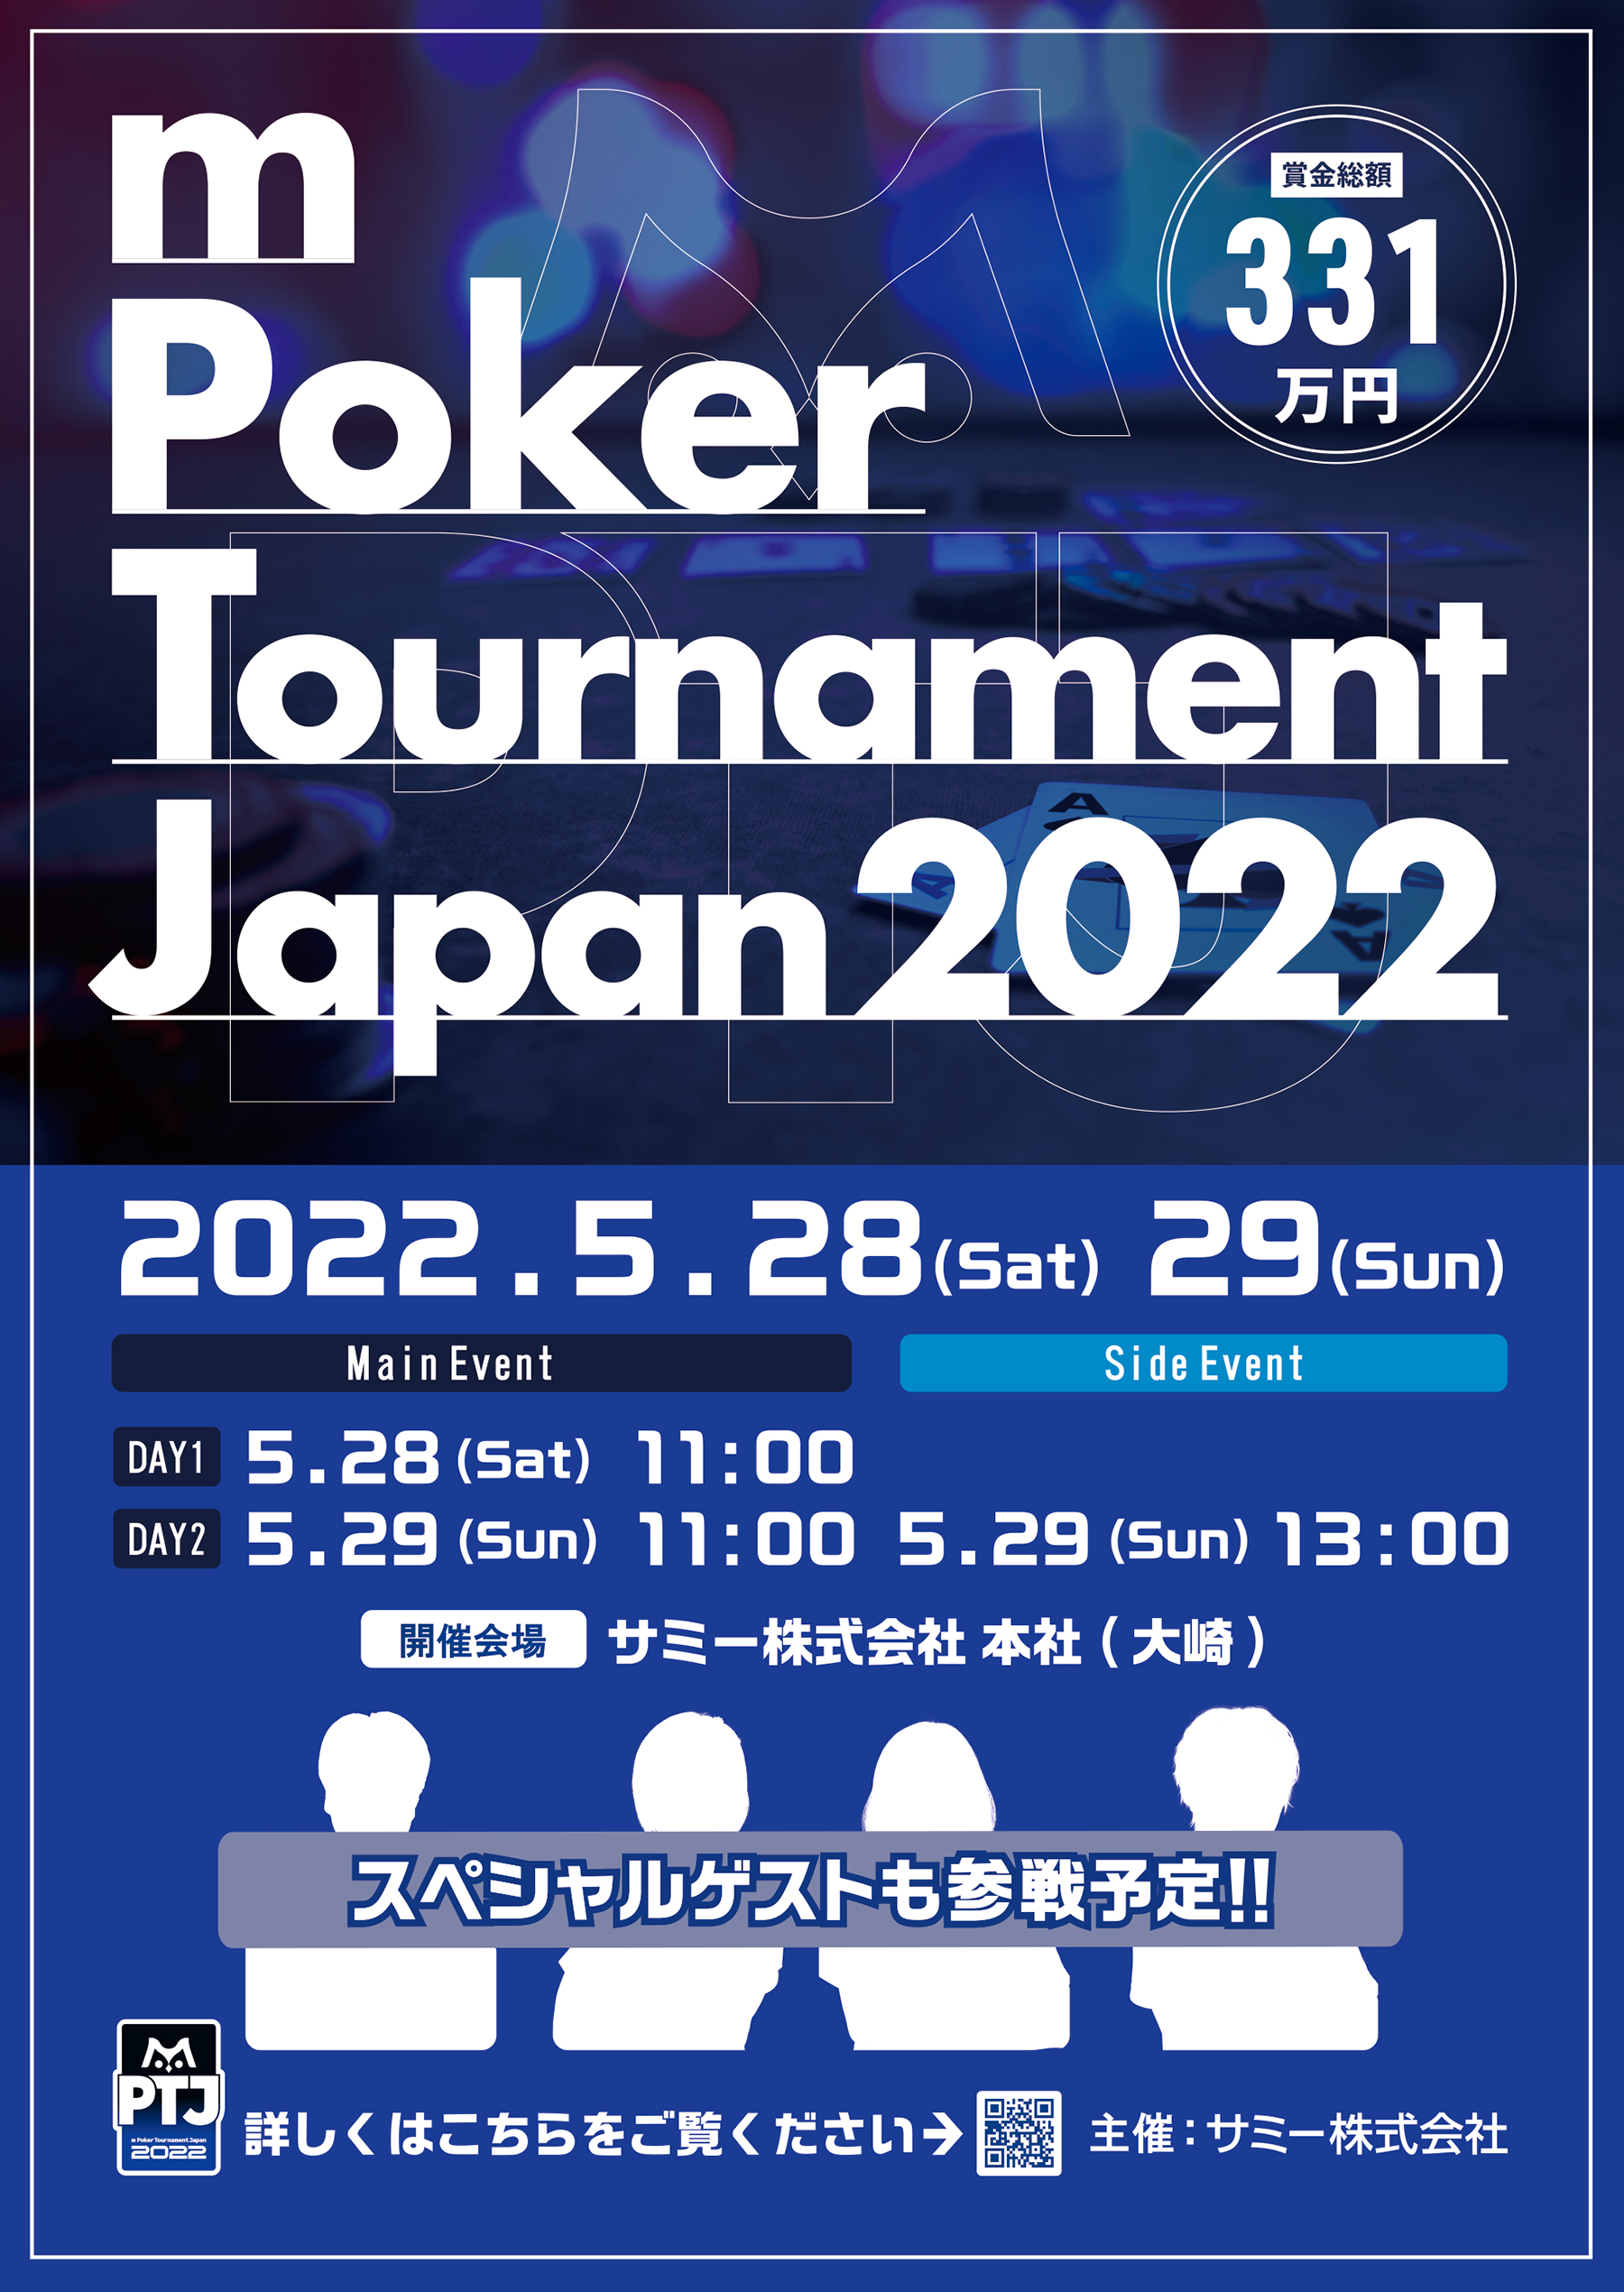 m Poker Tournament Japan 2022 賞金総額 331万円 2022.5.28(Sat) 29(Sun)